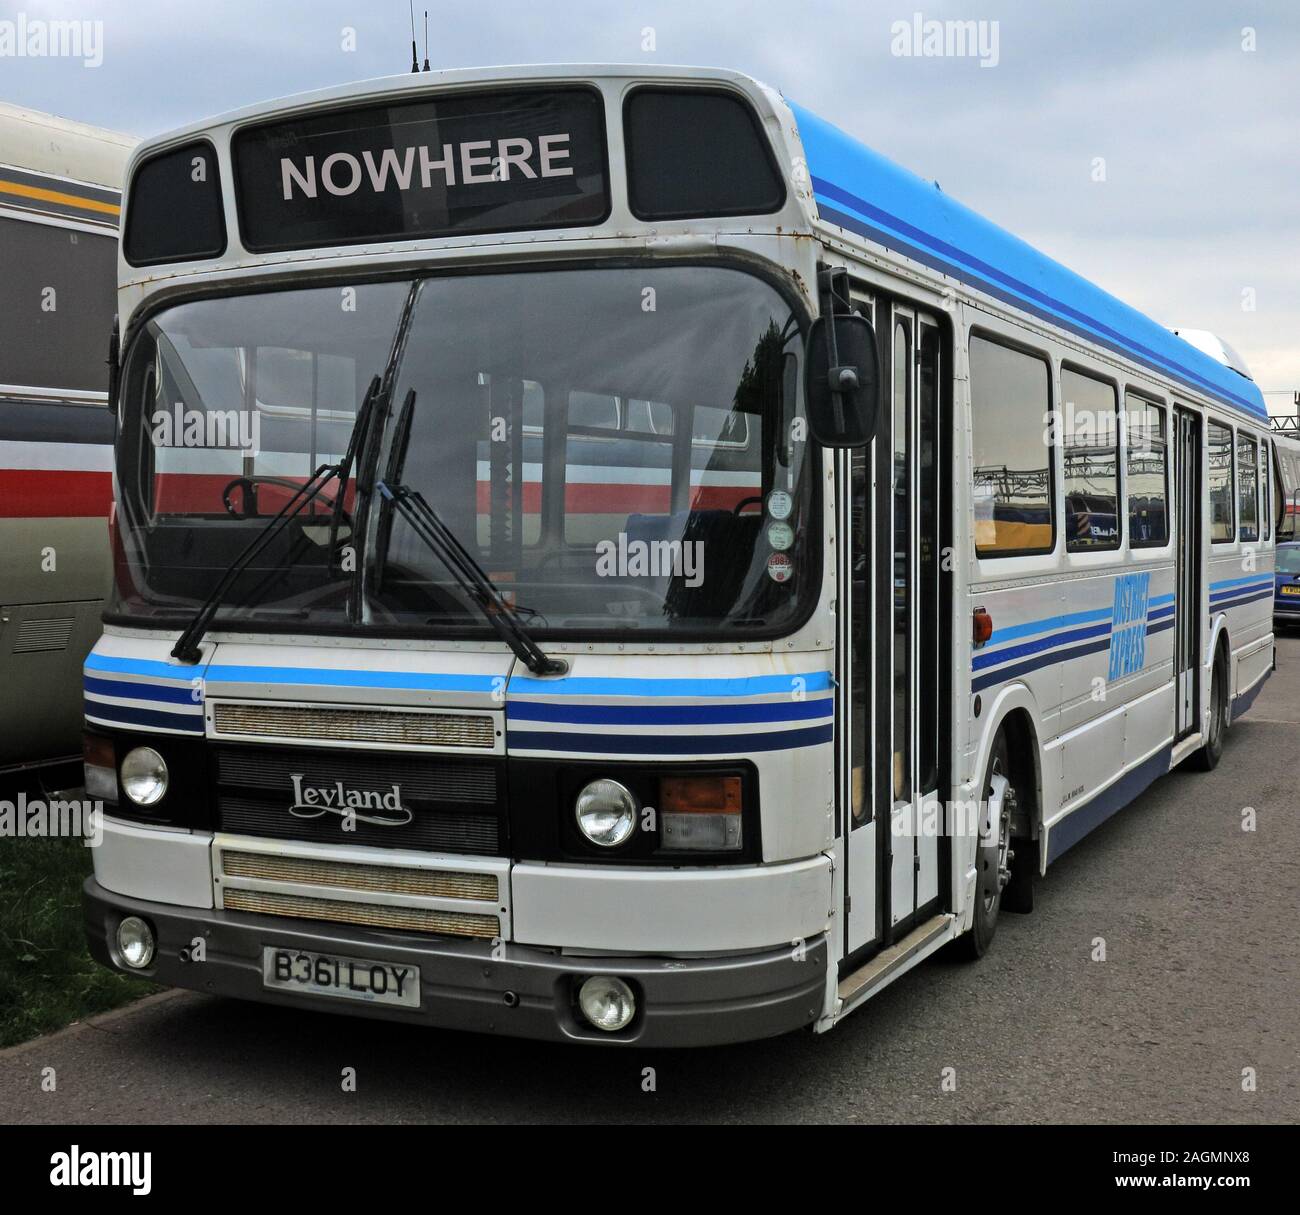 Brexit bus to nowhere, Leyland, District express - Leyland B361LOY, England, UK Stock Photo